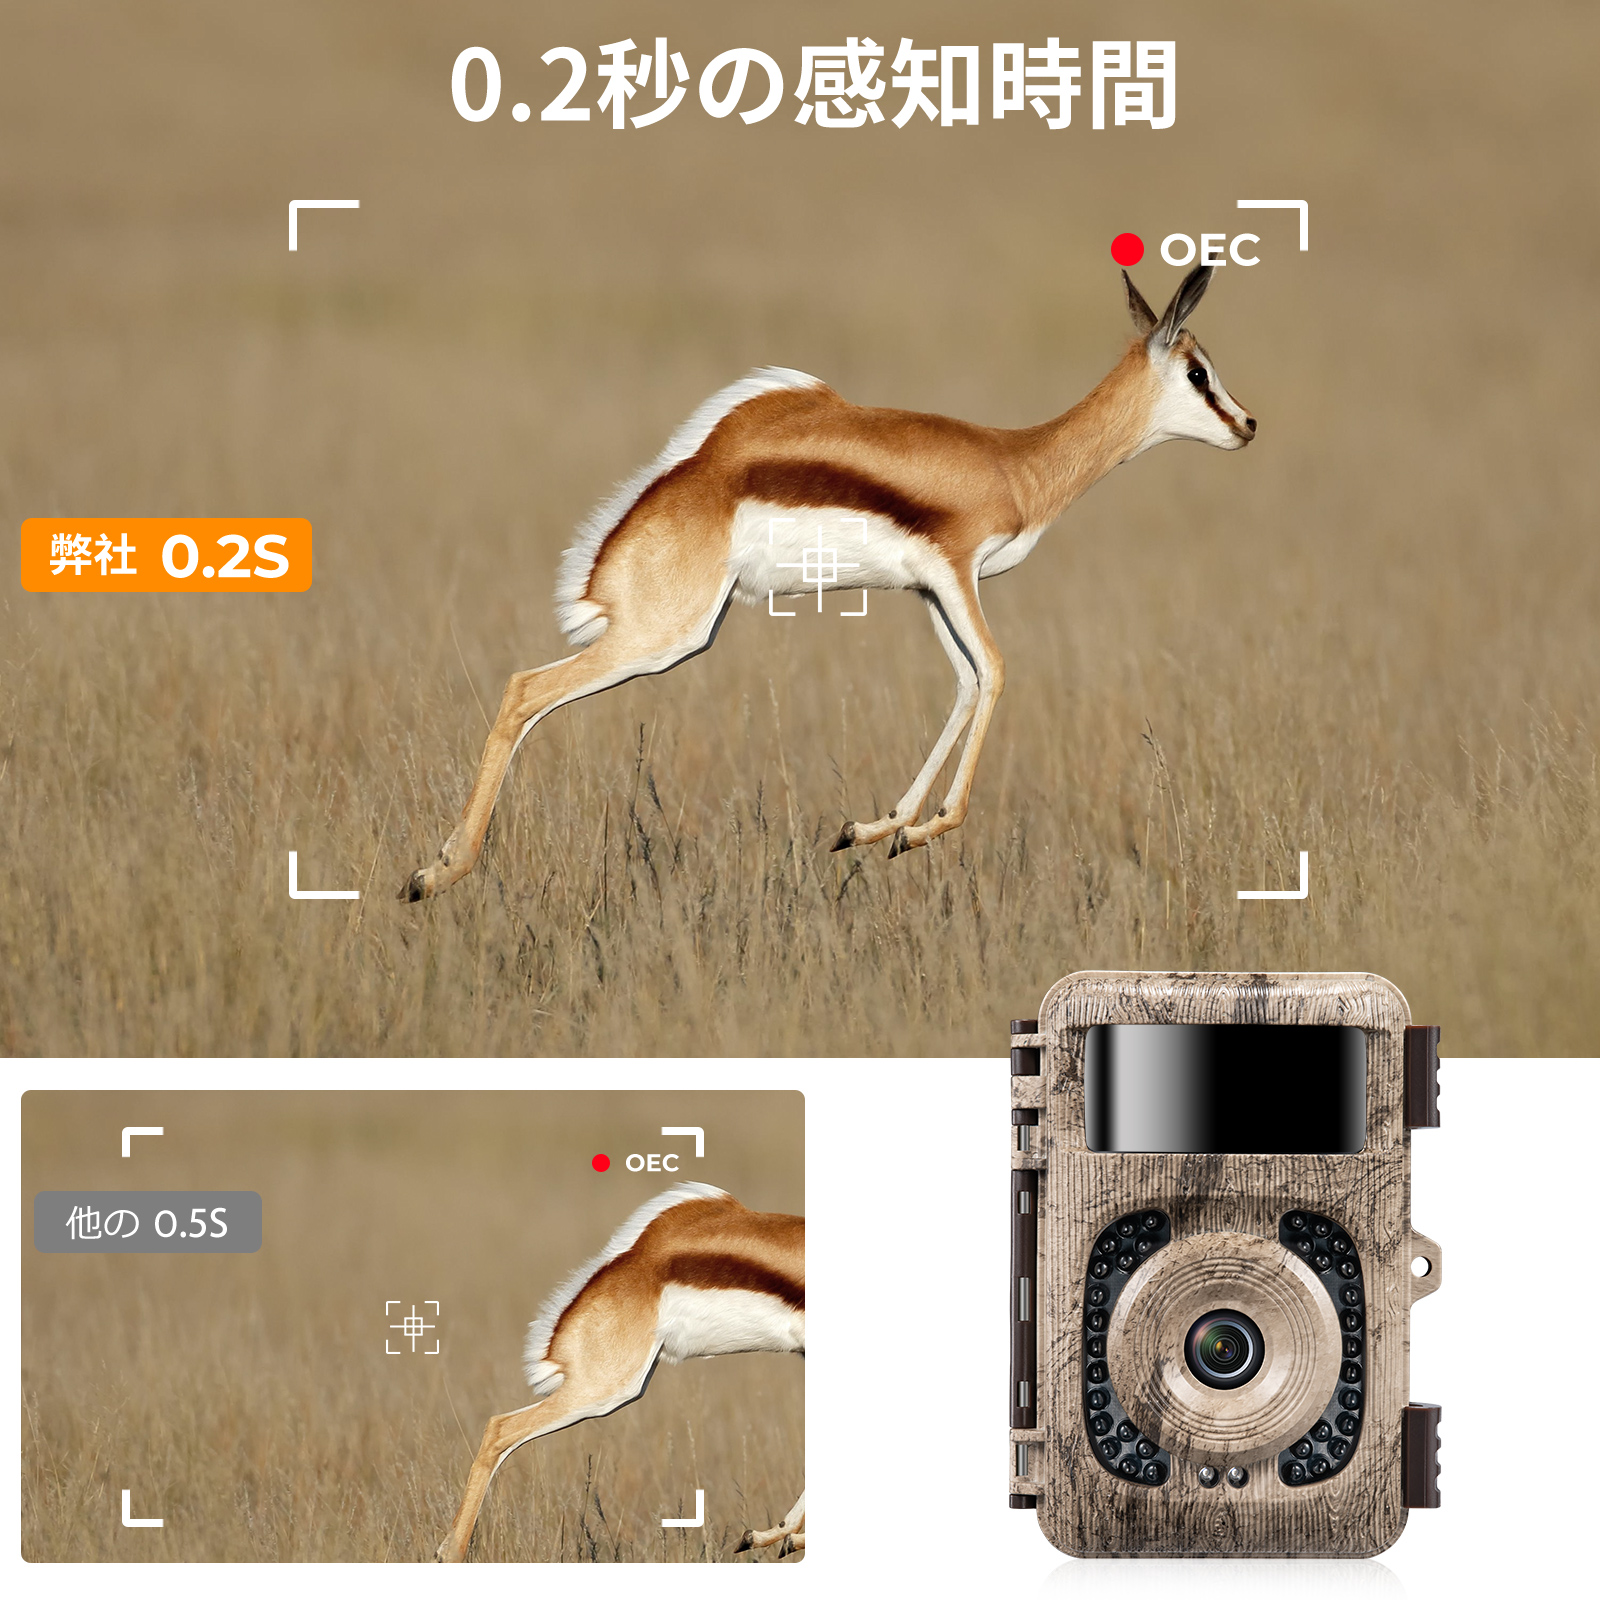 4K 32MP ハンティングカメラ WiFi Bluetooth トレイルカメラ 120° 超広検知範囲 スターライトナイトビジョン 0.2  秒の超高速トリガー速度 IP66 防水 U3、64GB SDカードと乾電池8本付き 樹皮色 KF CONCEPT JP01